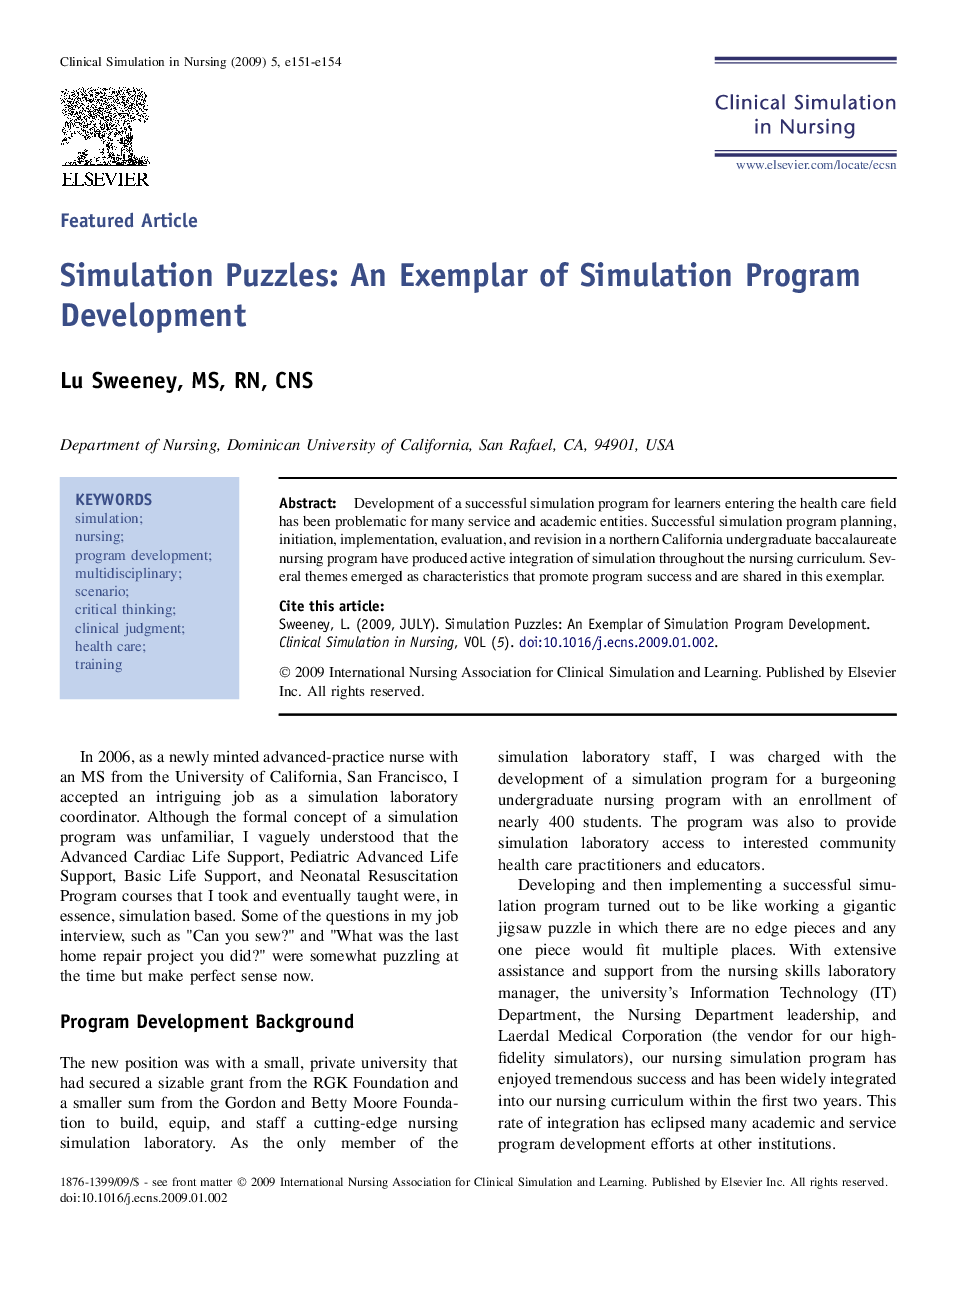 Simulation Puzzles: An Exemplar of Simulation Program Development 